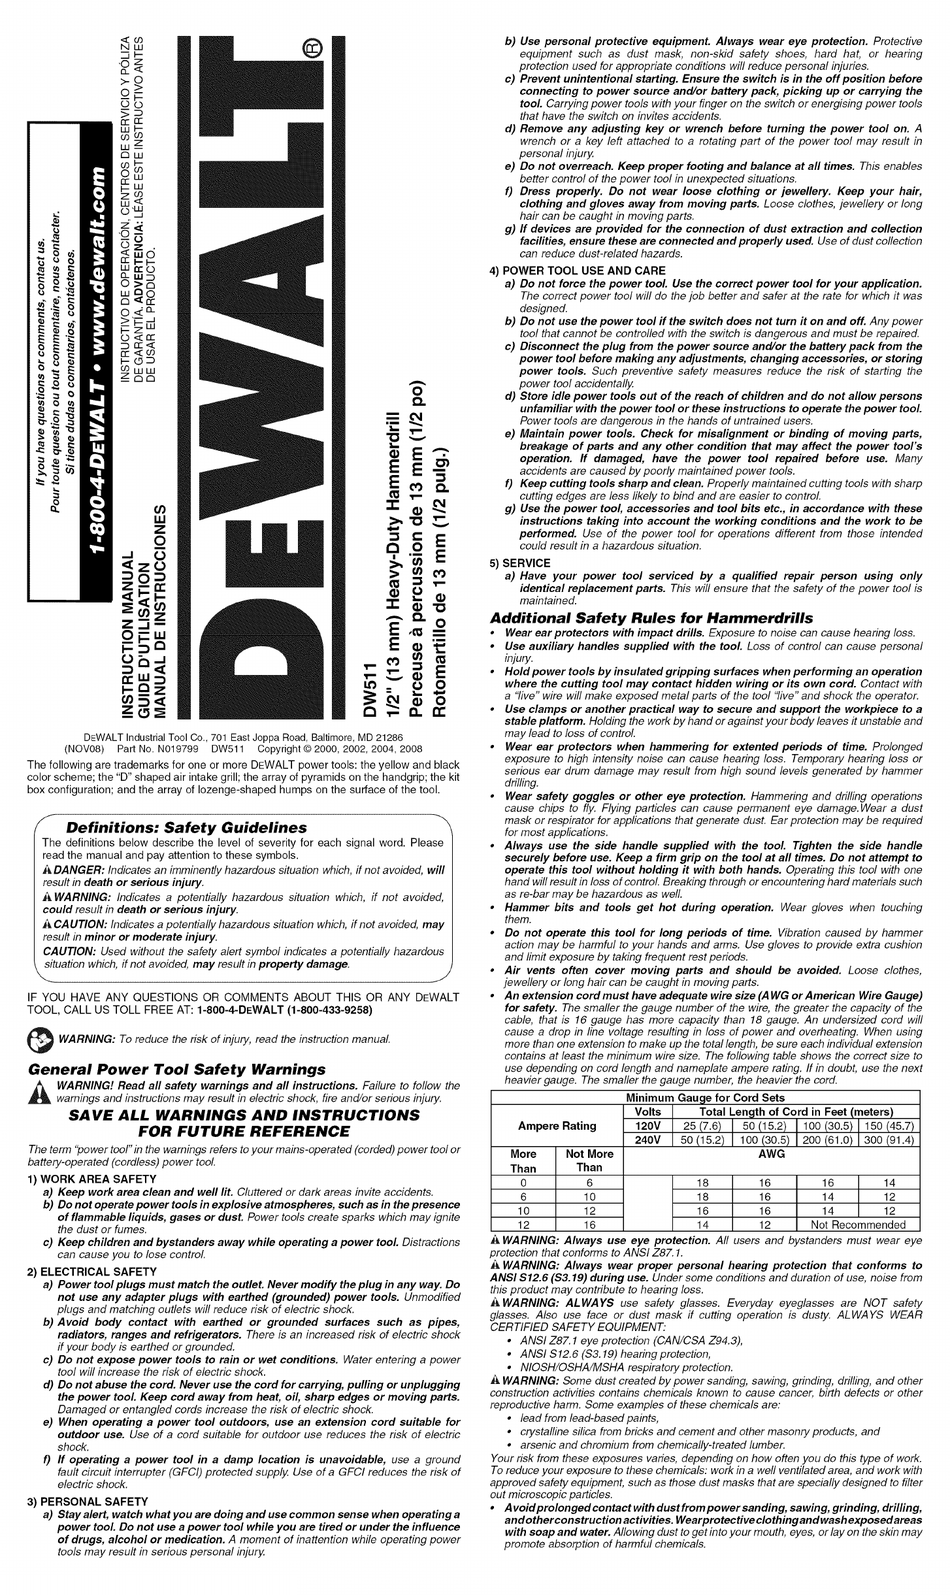 Gym insekt manuskript DEWALT DW511 INSTRUCTION MANUAL Pdf Download | ManualsLib